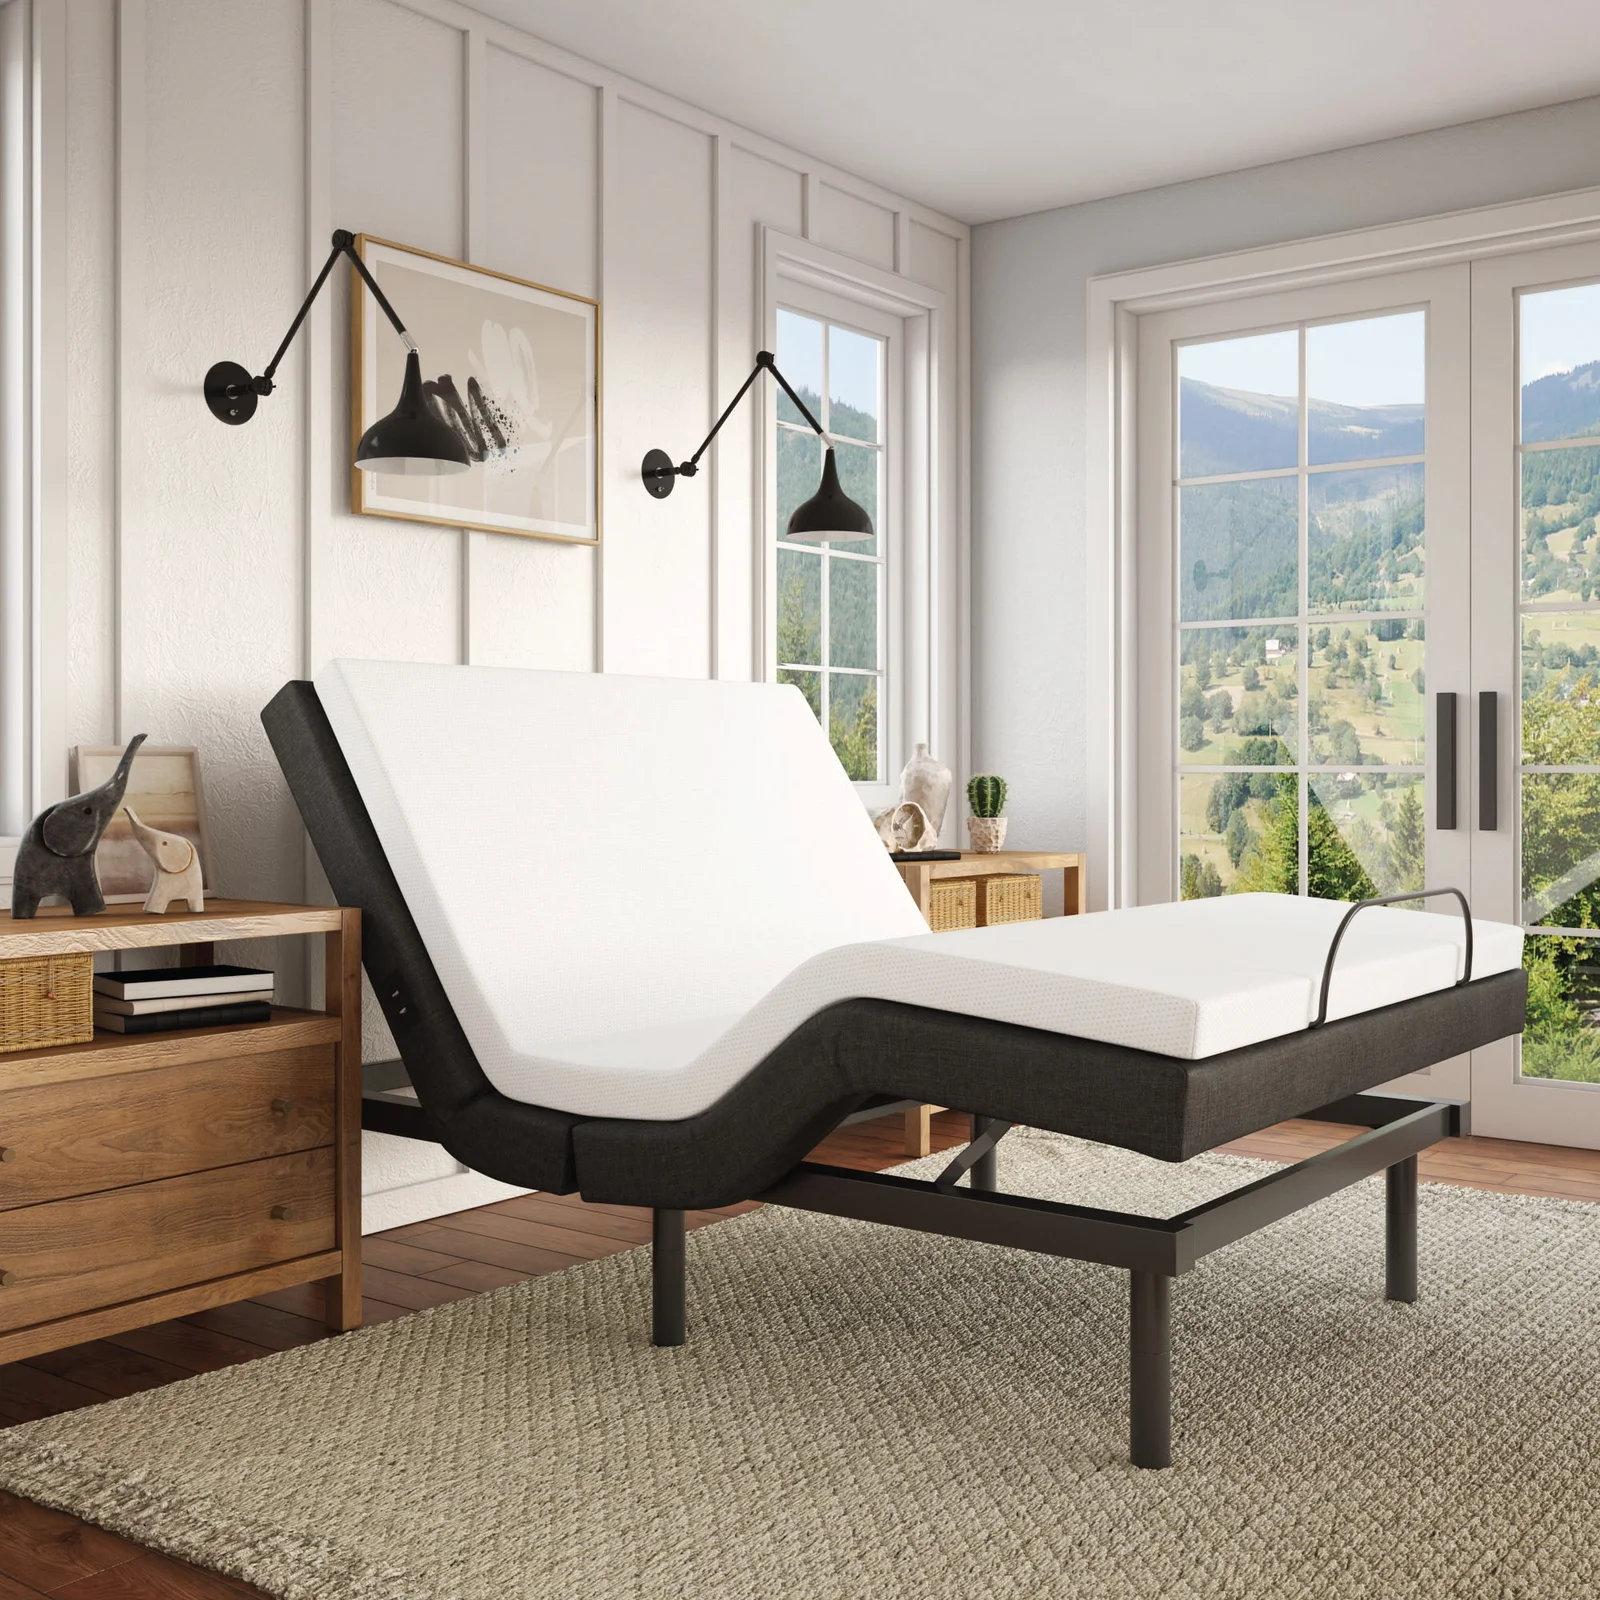 Wayfair Sleep 15 Massaging Zero Gravity Adjustable Bed With Wireless Remote 